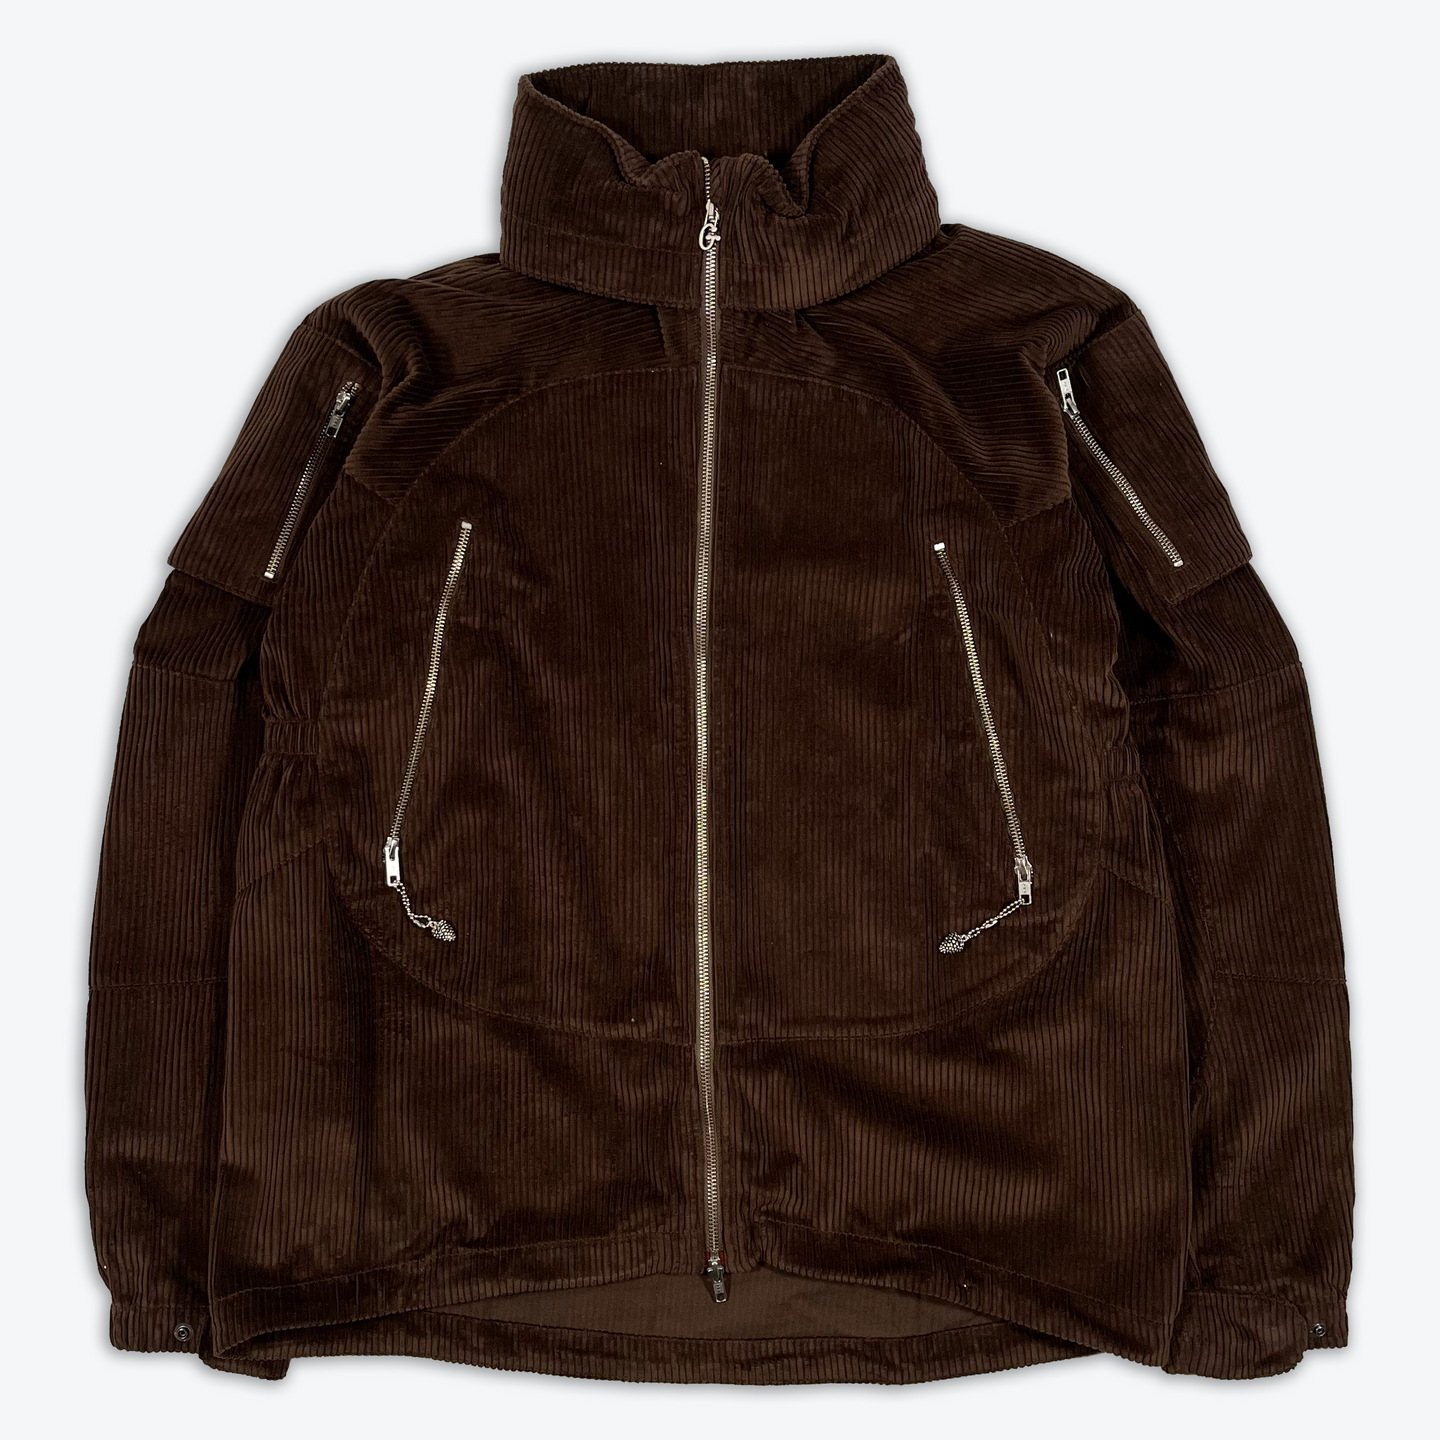 Charm Jacket - Chocolate Brown Corduroy